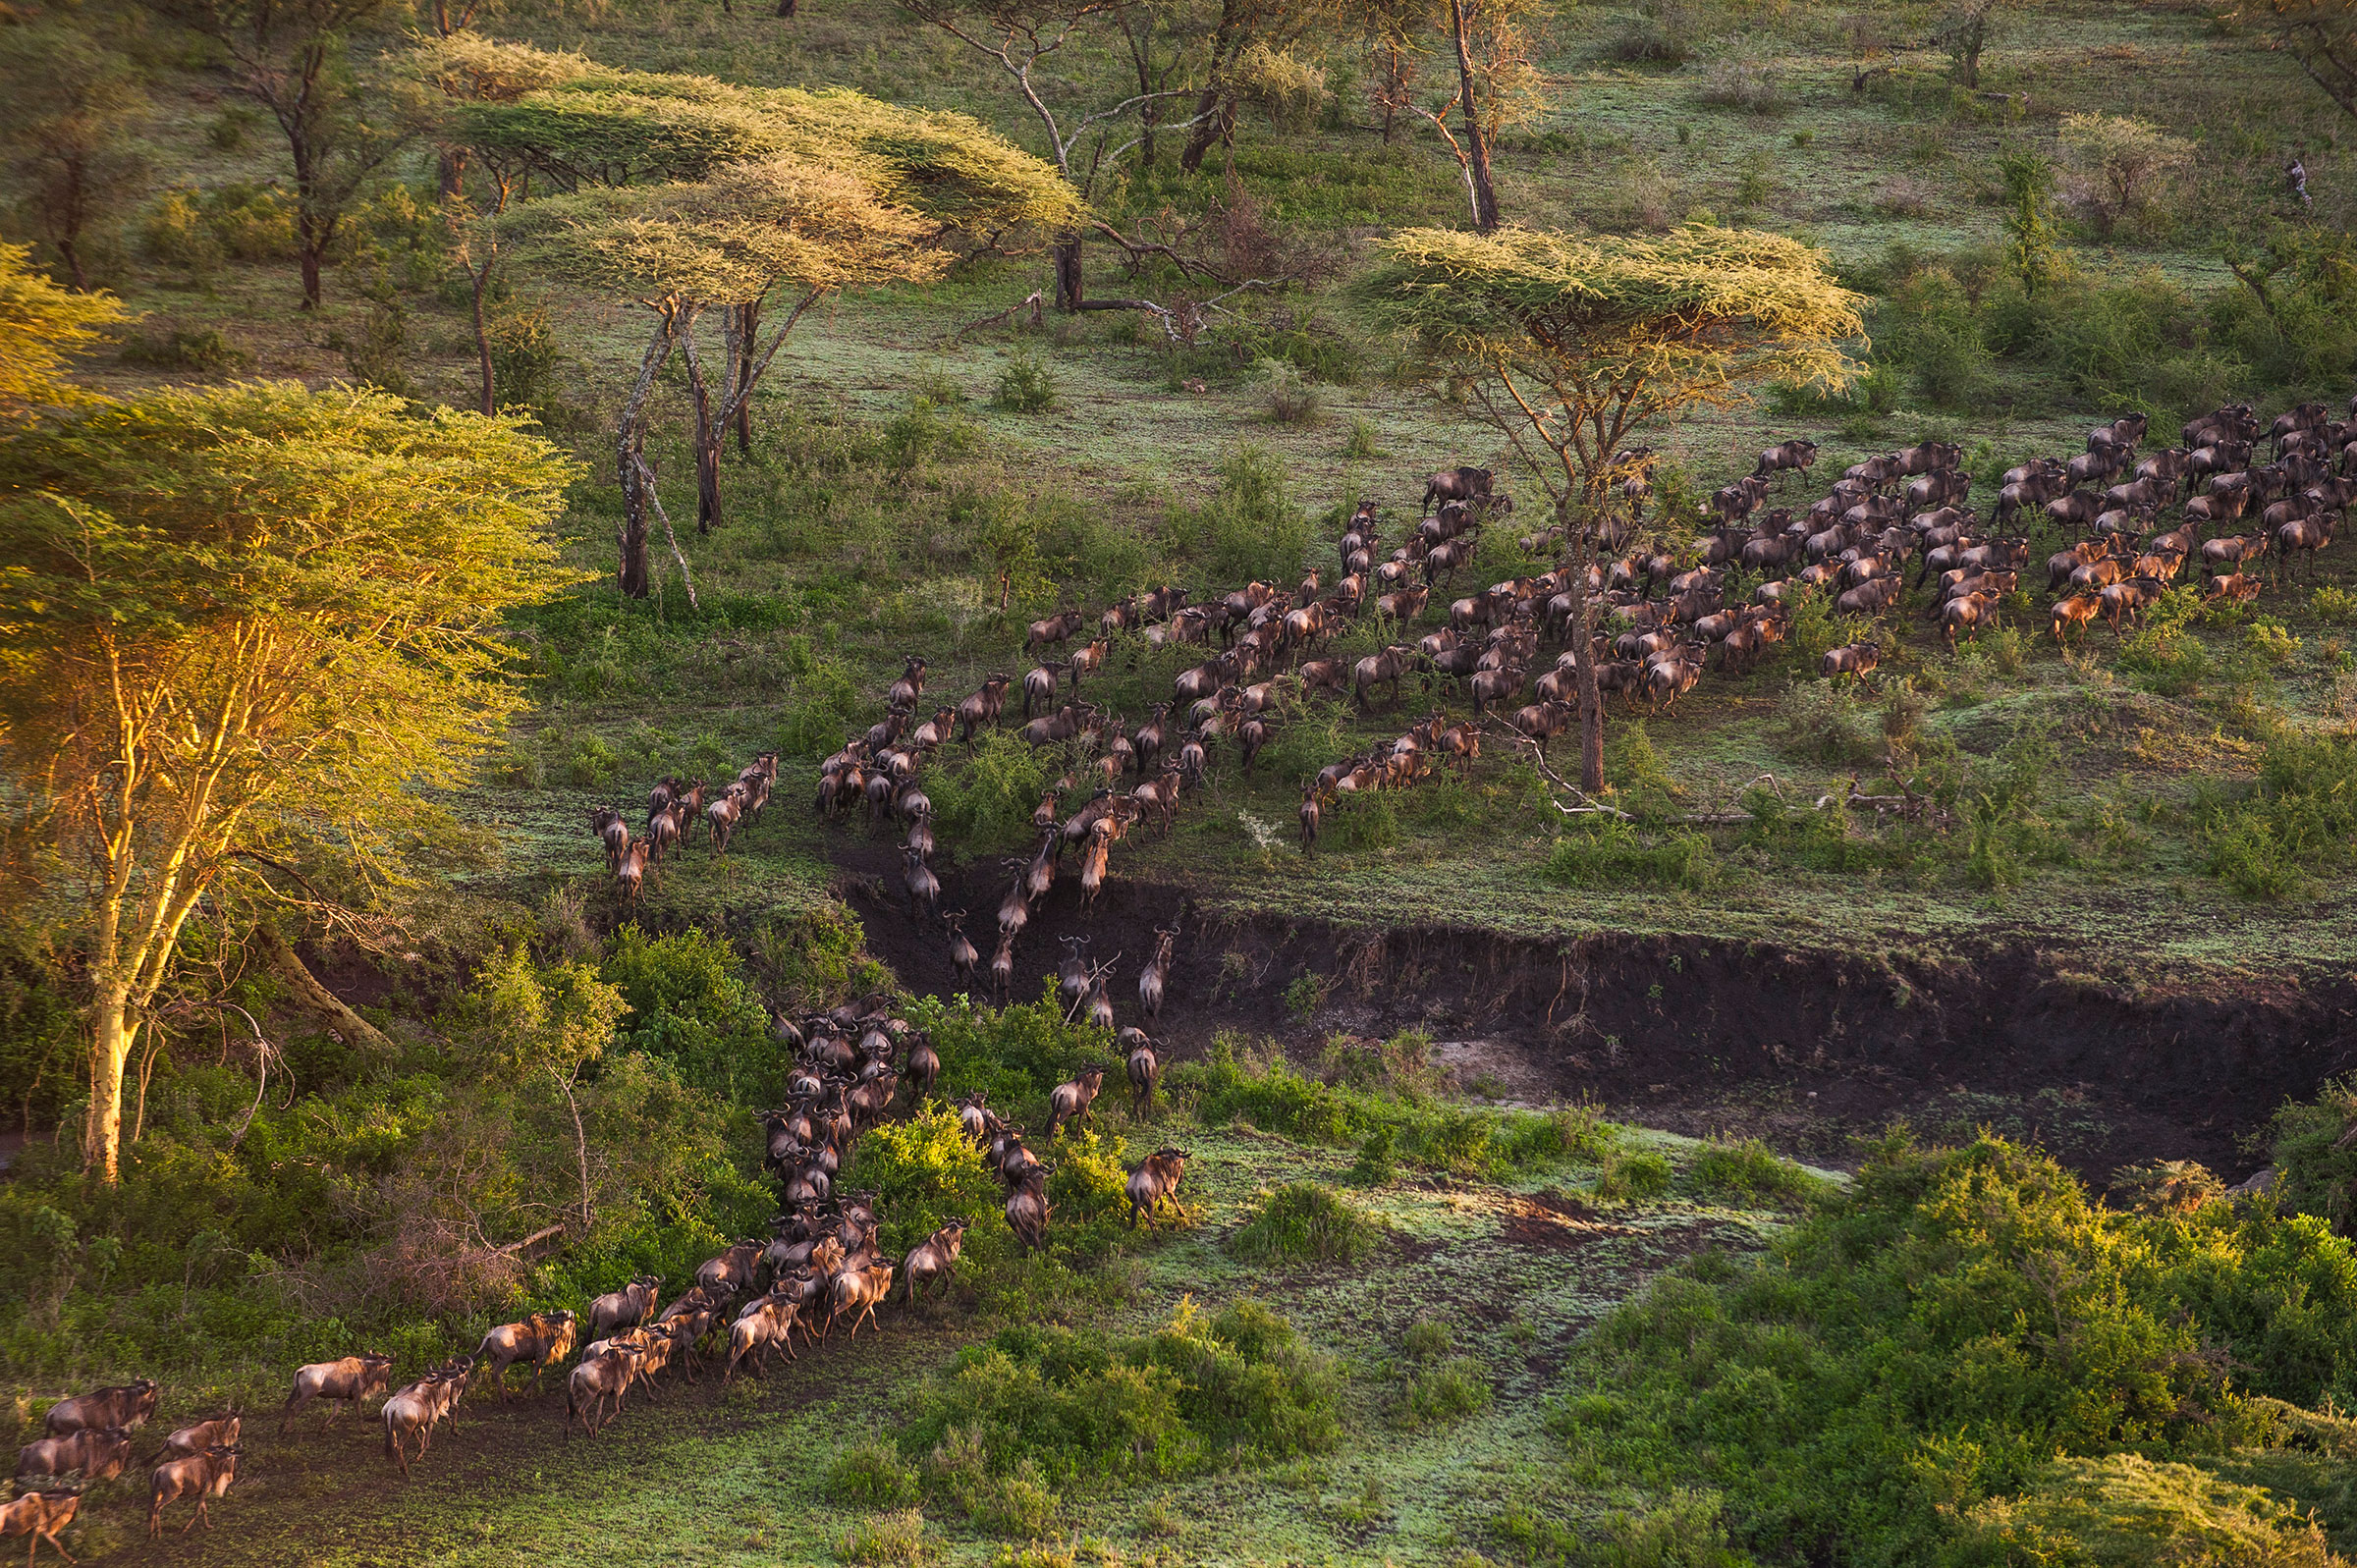 shoulder season safari in Tanzania